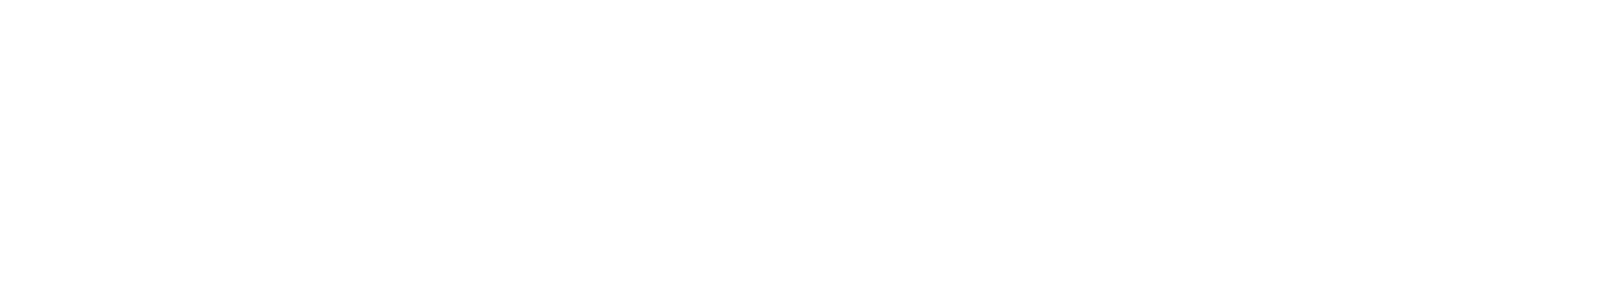 CASIO logo large for dark backgrounds (transparent PNG)